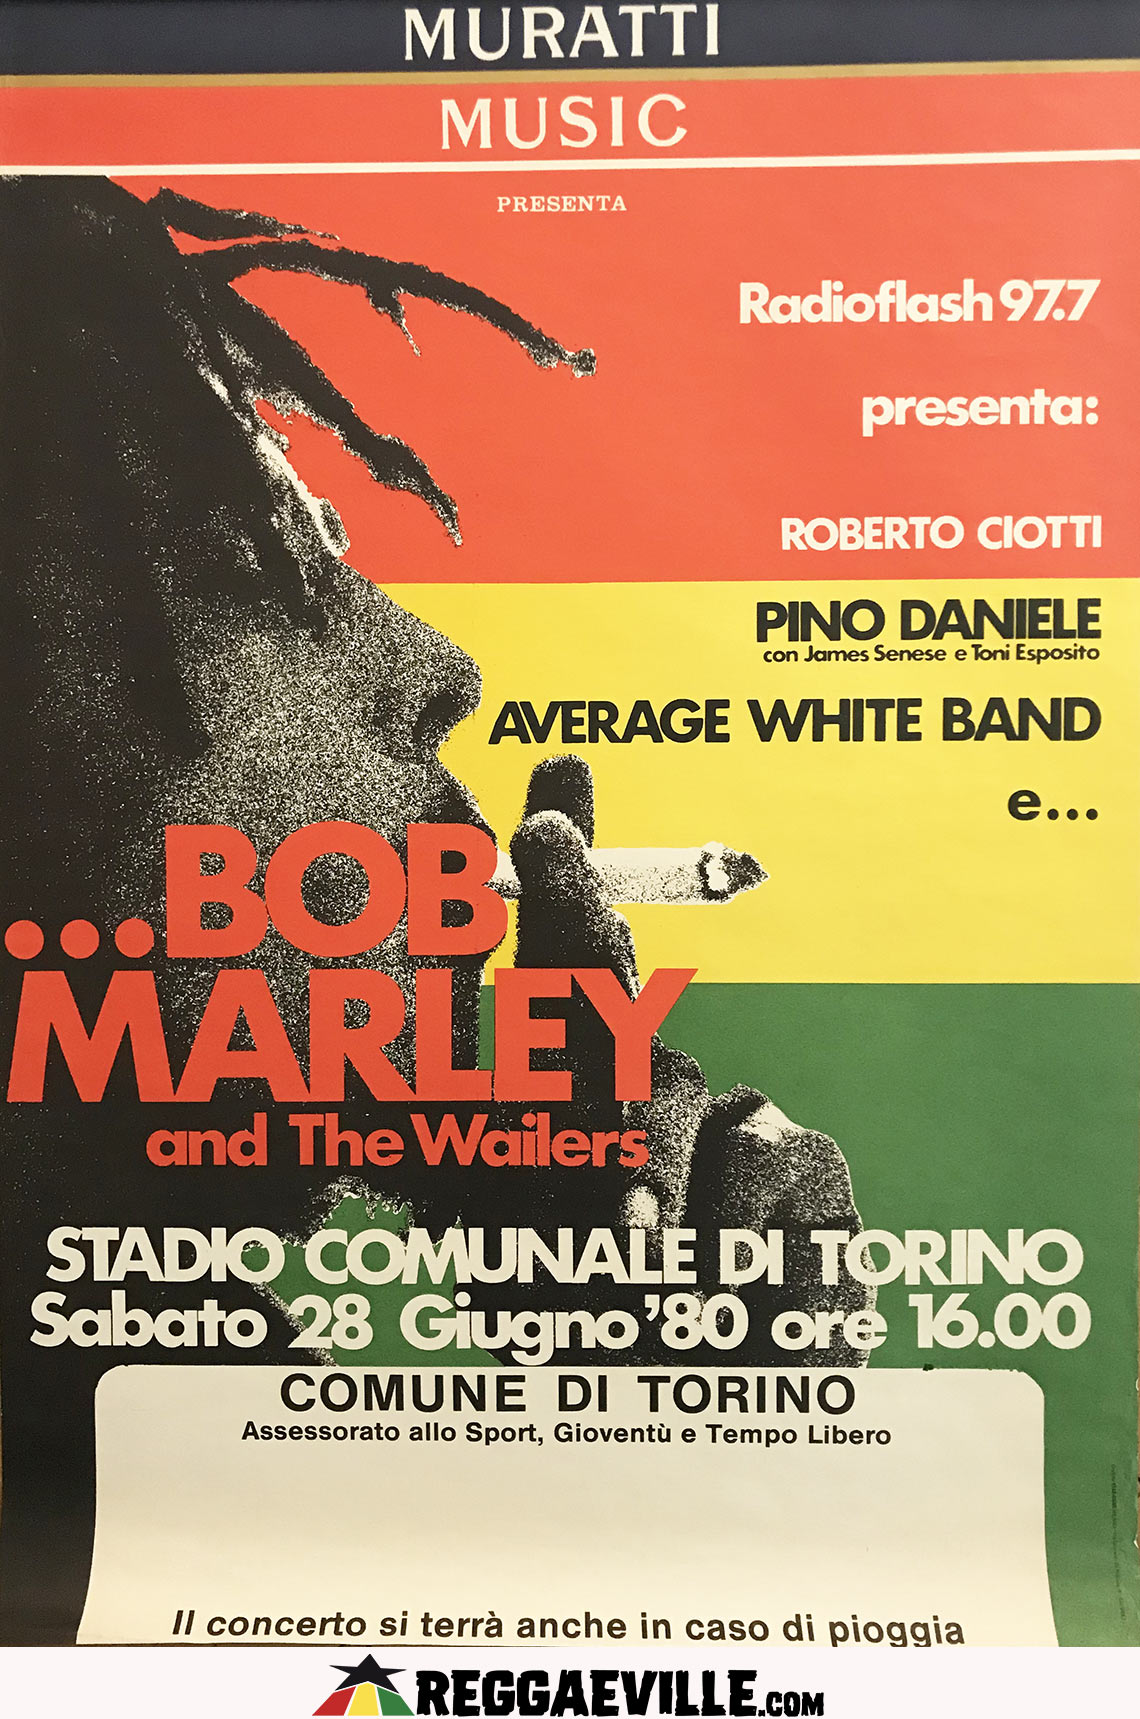 Bob Marley Poster - The Pioneer of Reggae